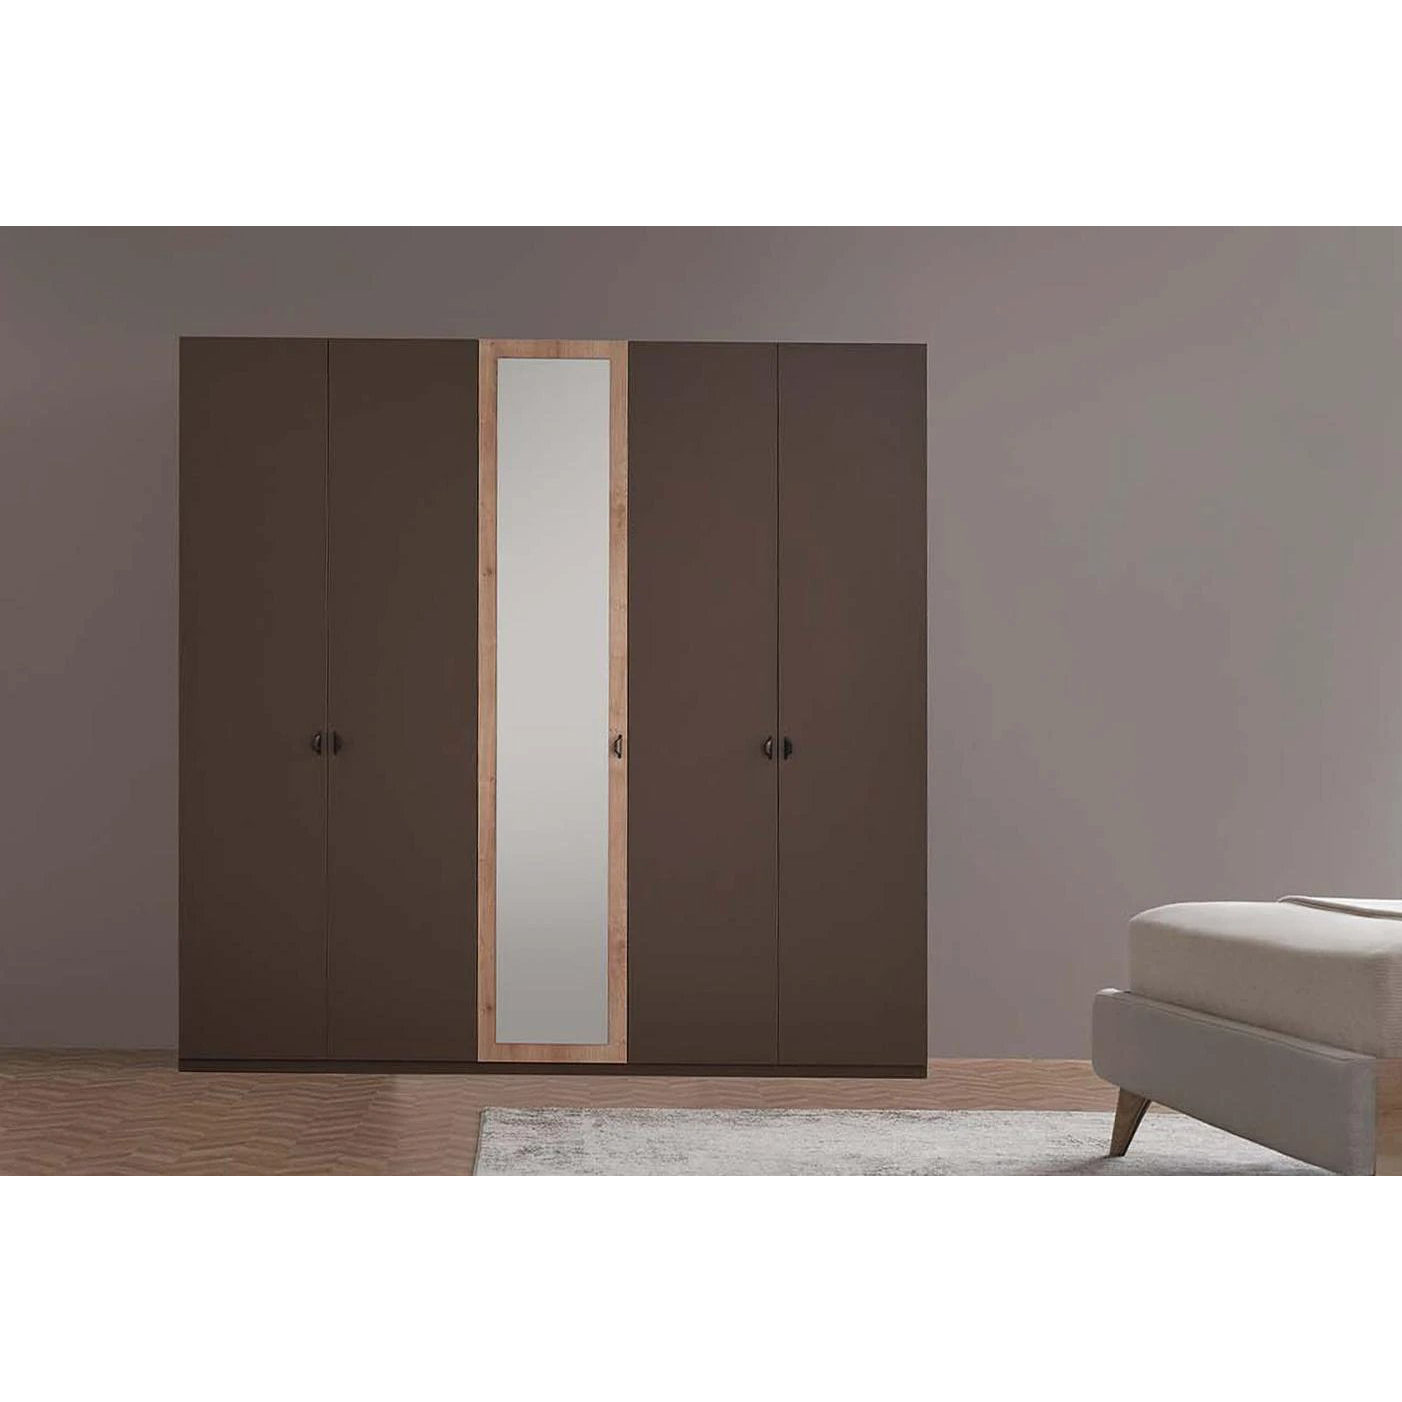 Шкаф платяной Enza Home Polka, 5 дверный, размер 226х61х222 см (EH30659)EH30659